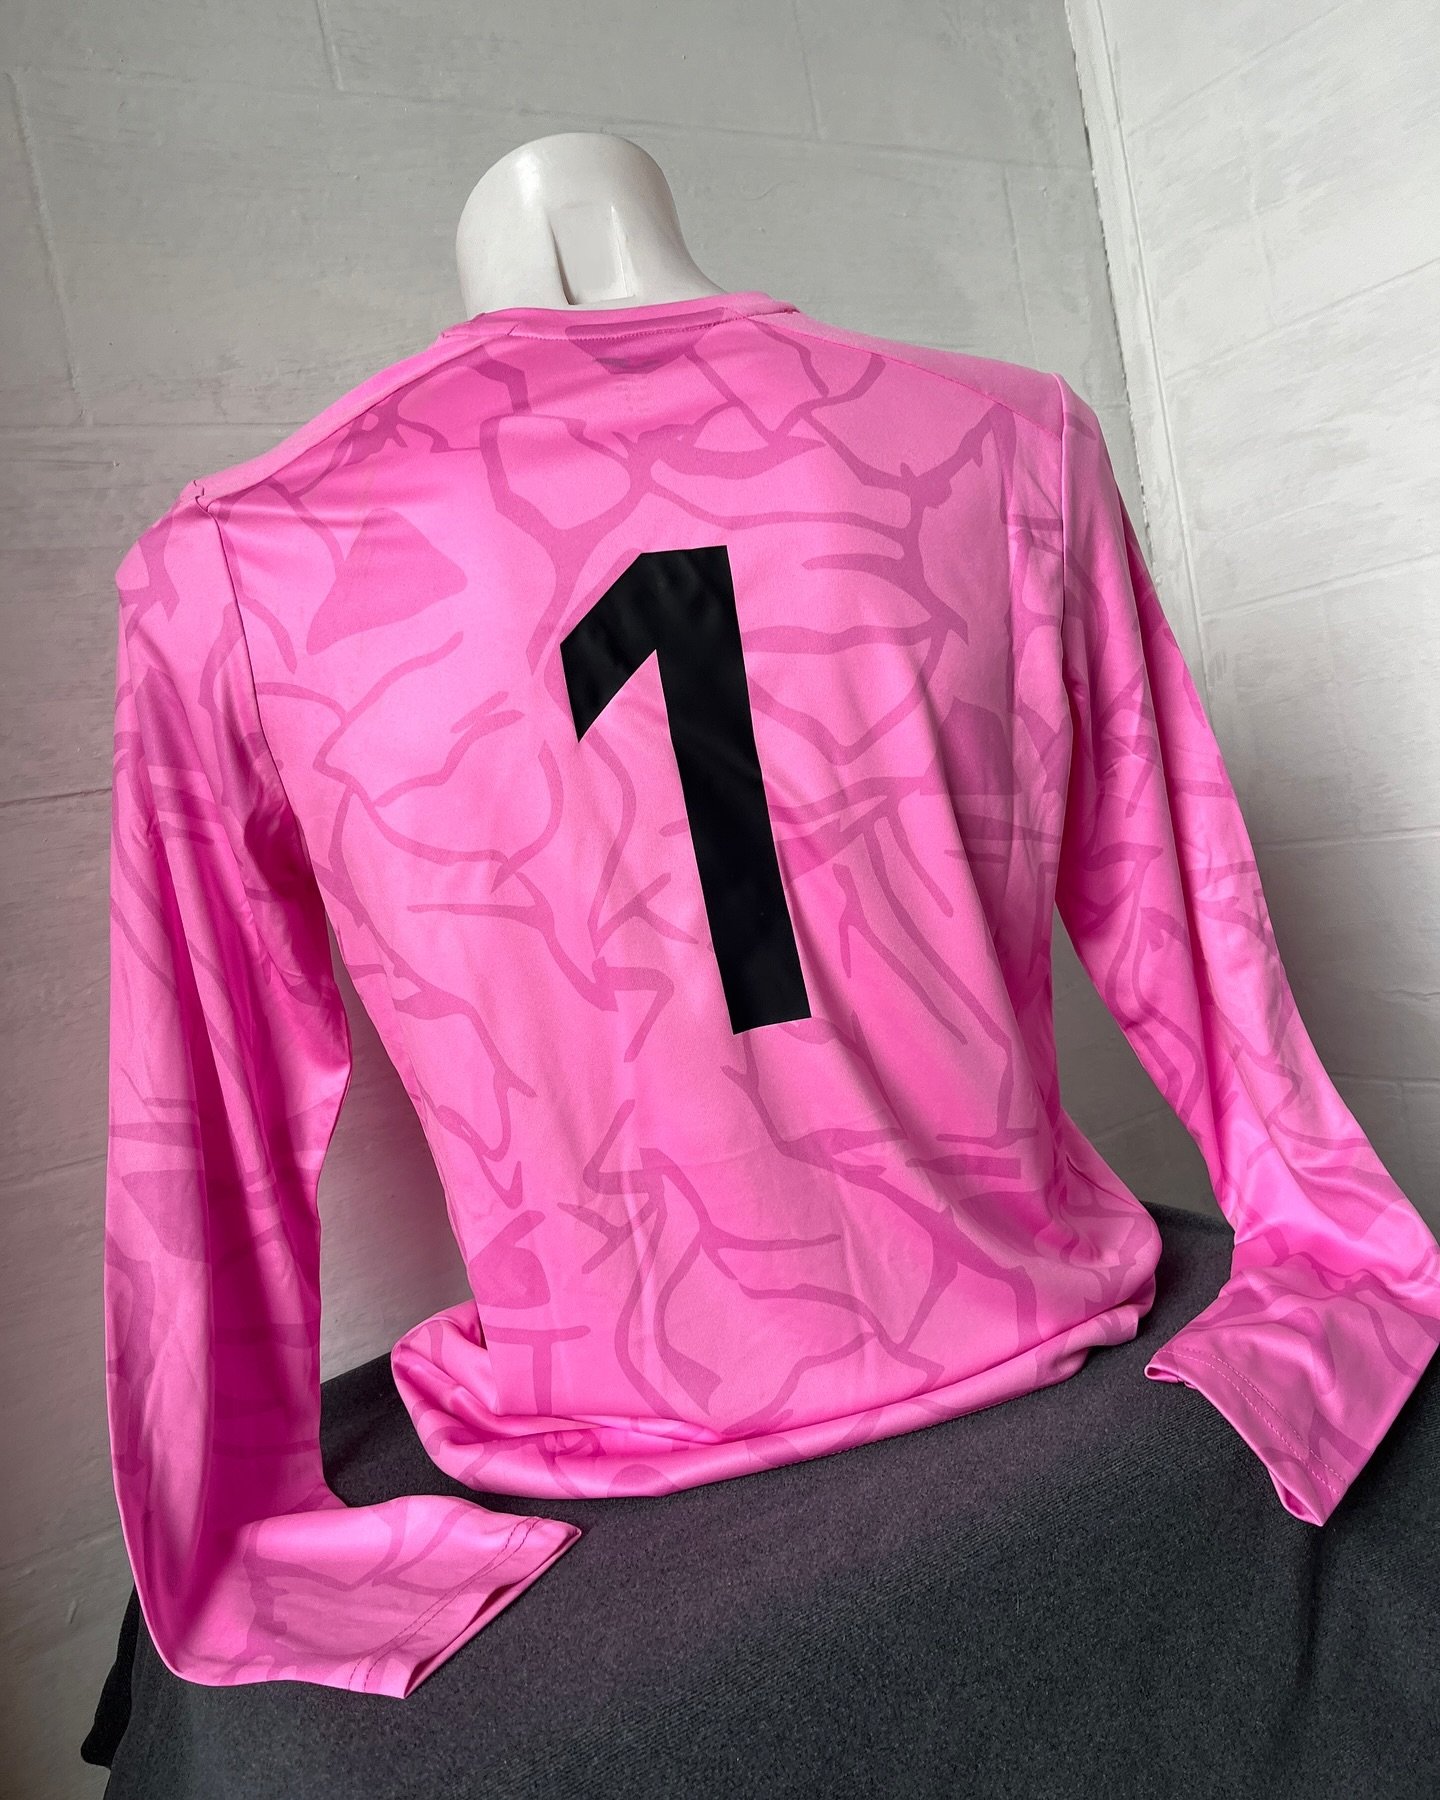 On Wednesdays we wear pink!.. get in touch for your squad kits for next season! 

#footballkit #goalie #goalies #teamwear #goaliekit #onwednesdayswewearpink